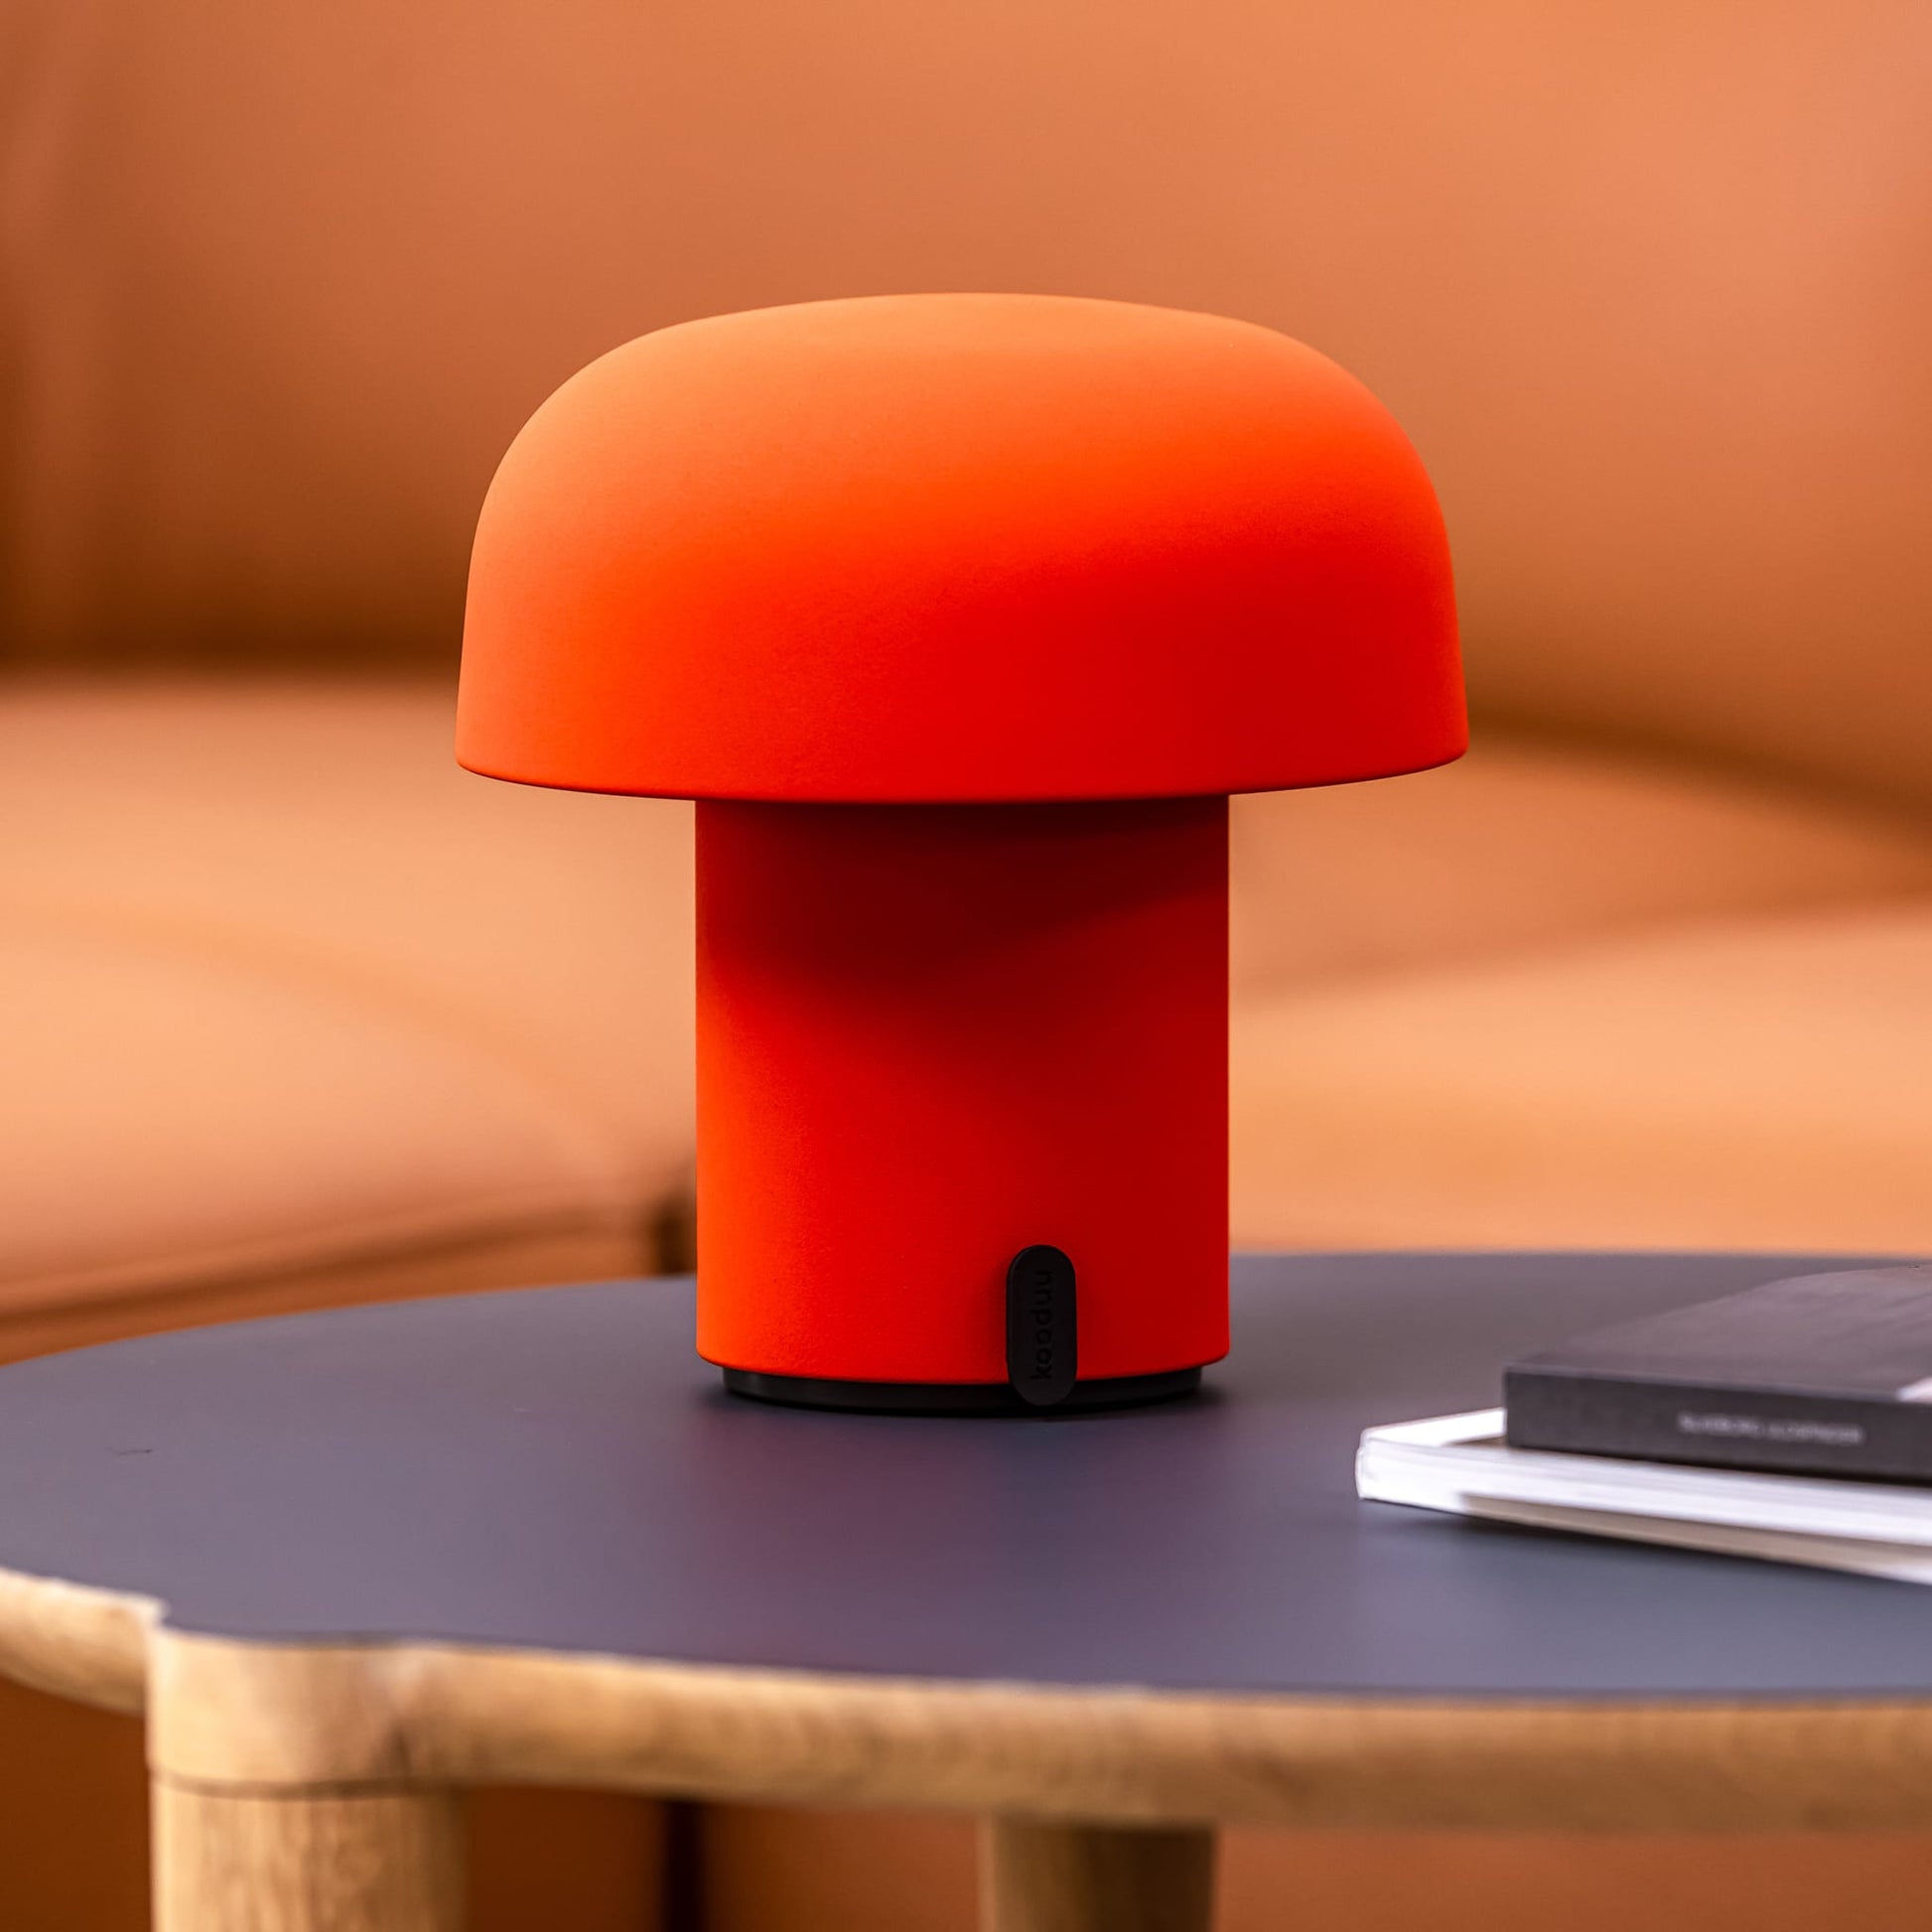 Sensa Orange LED lamp by Kooduu, perfect for versatile lighting in Canadian homes.